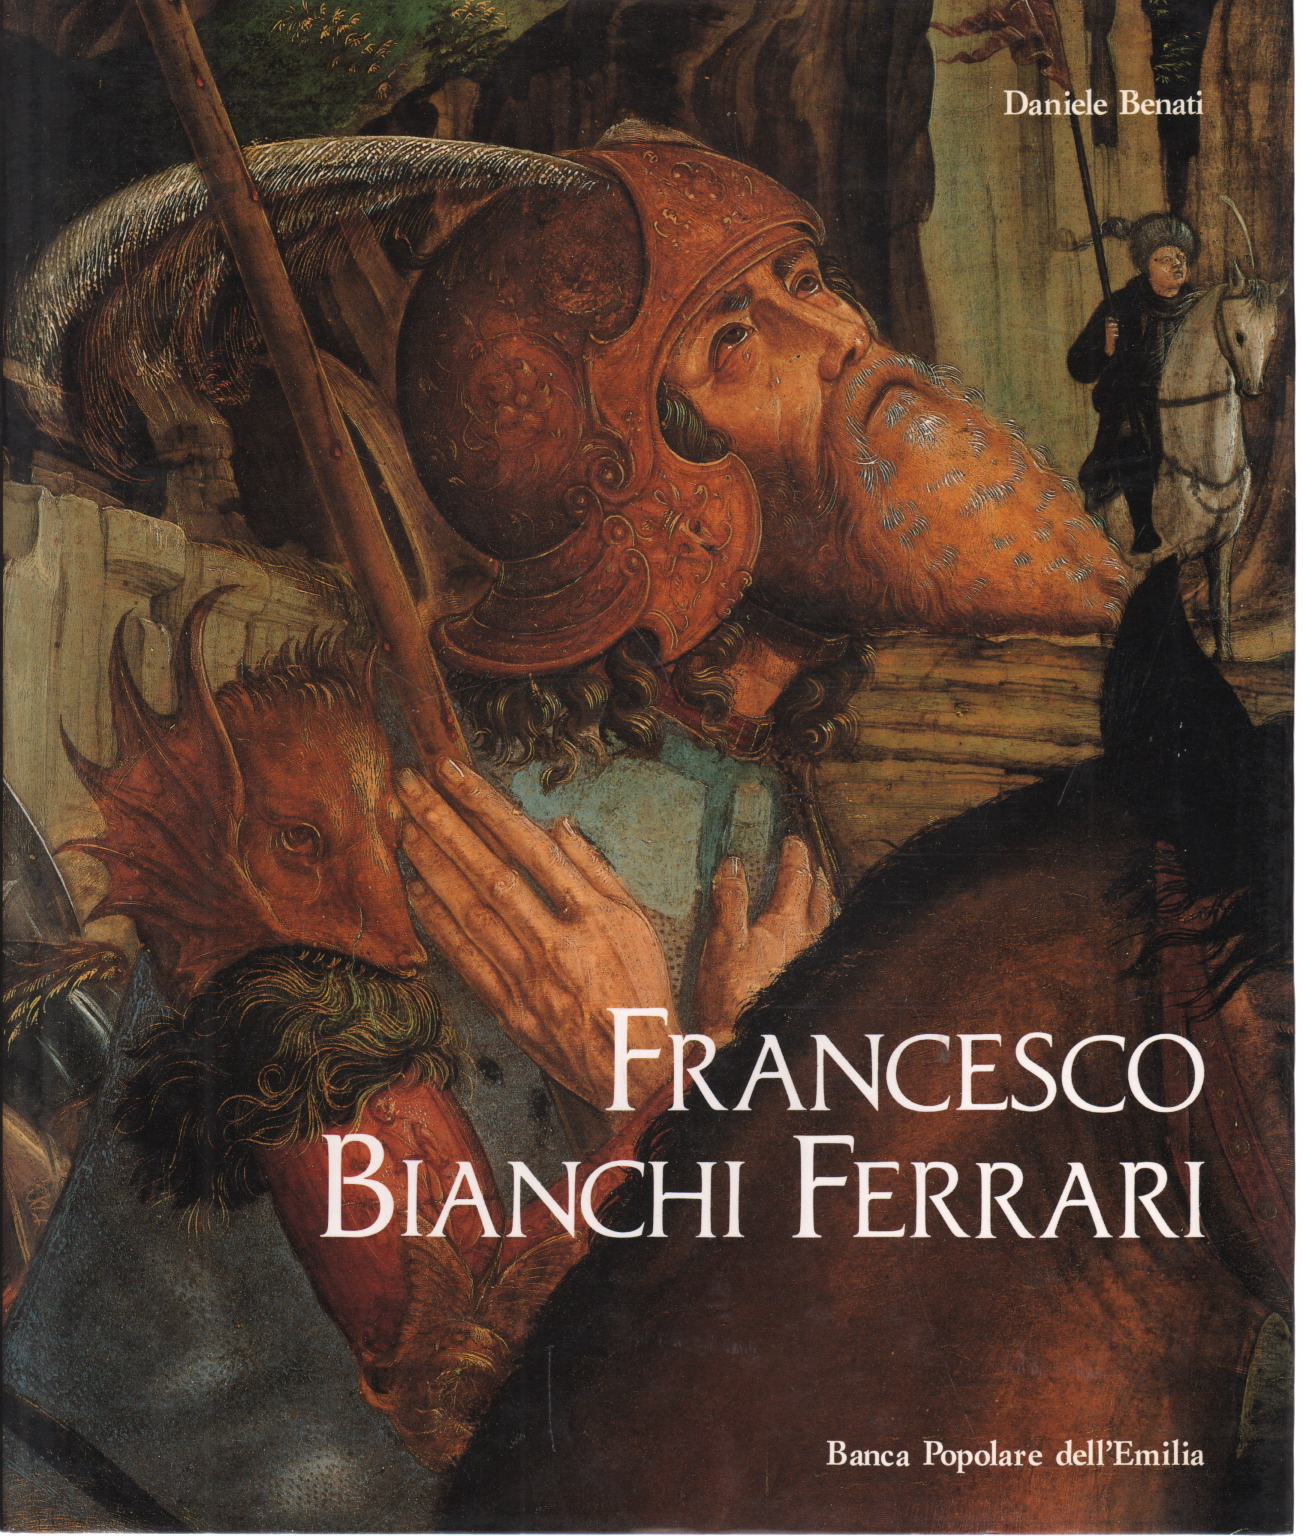 Francesco Bianchi Ferrari and painting%2